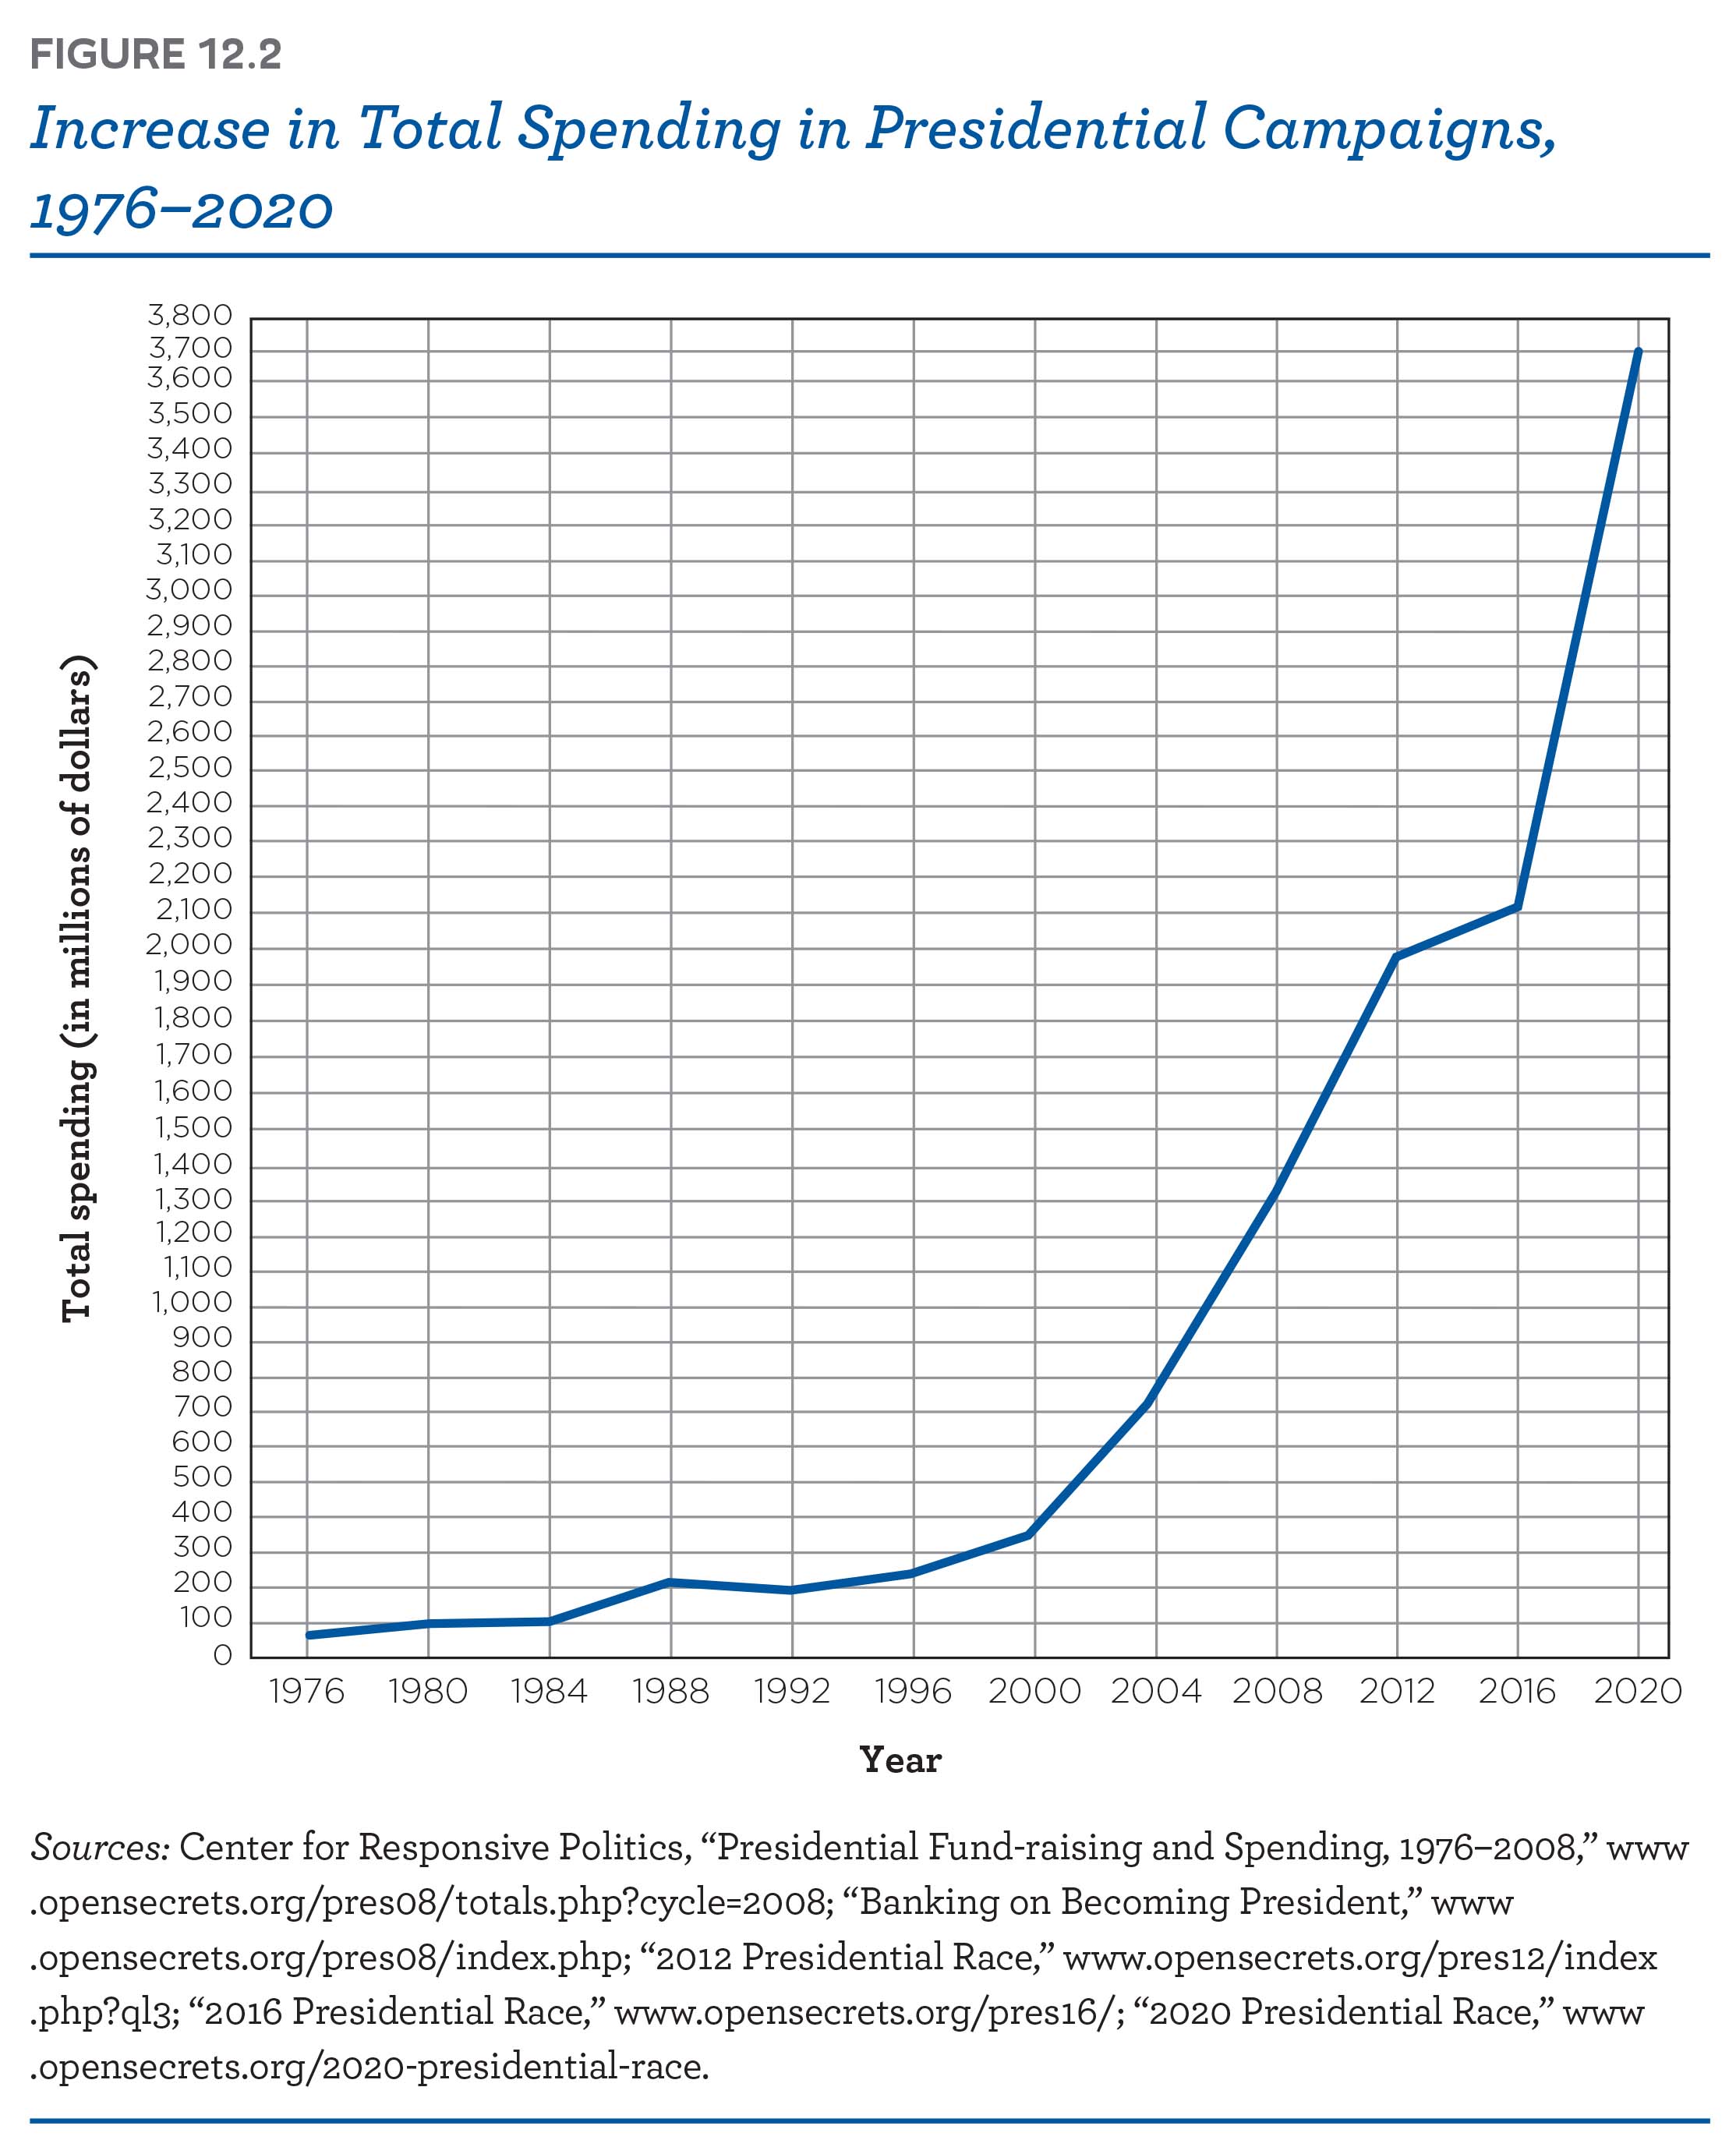 Increase in total spending in presidential campaigns, 1976-2020